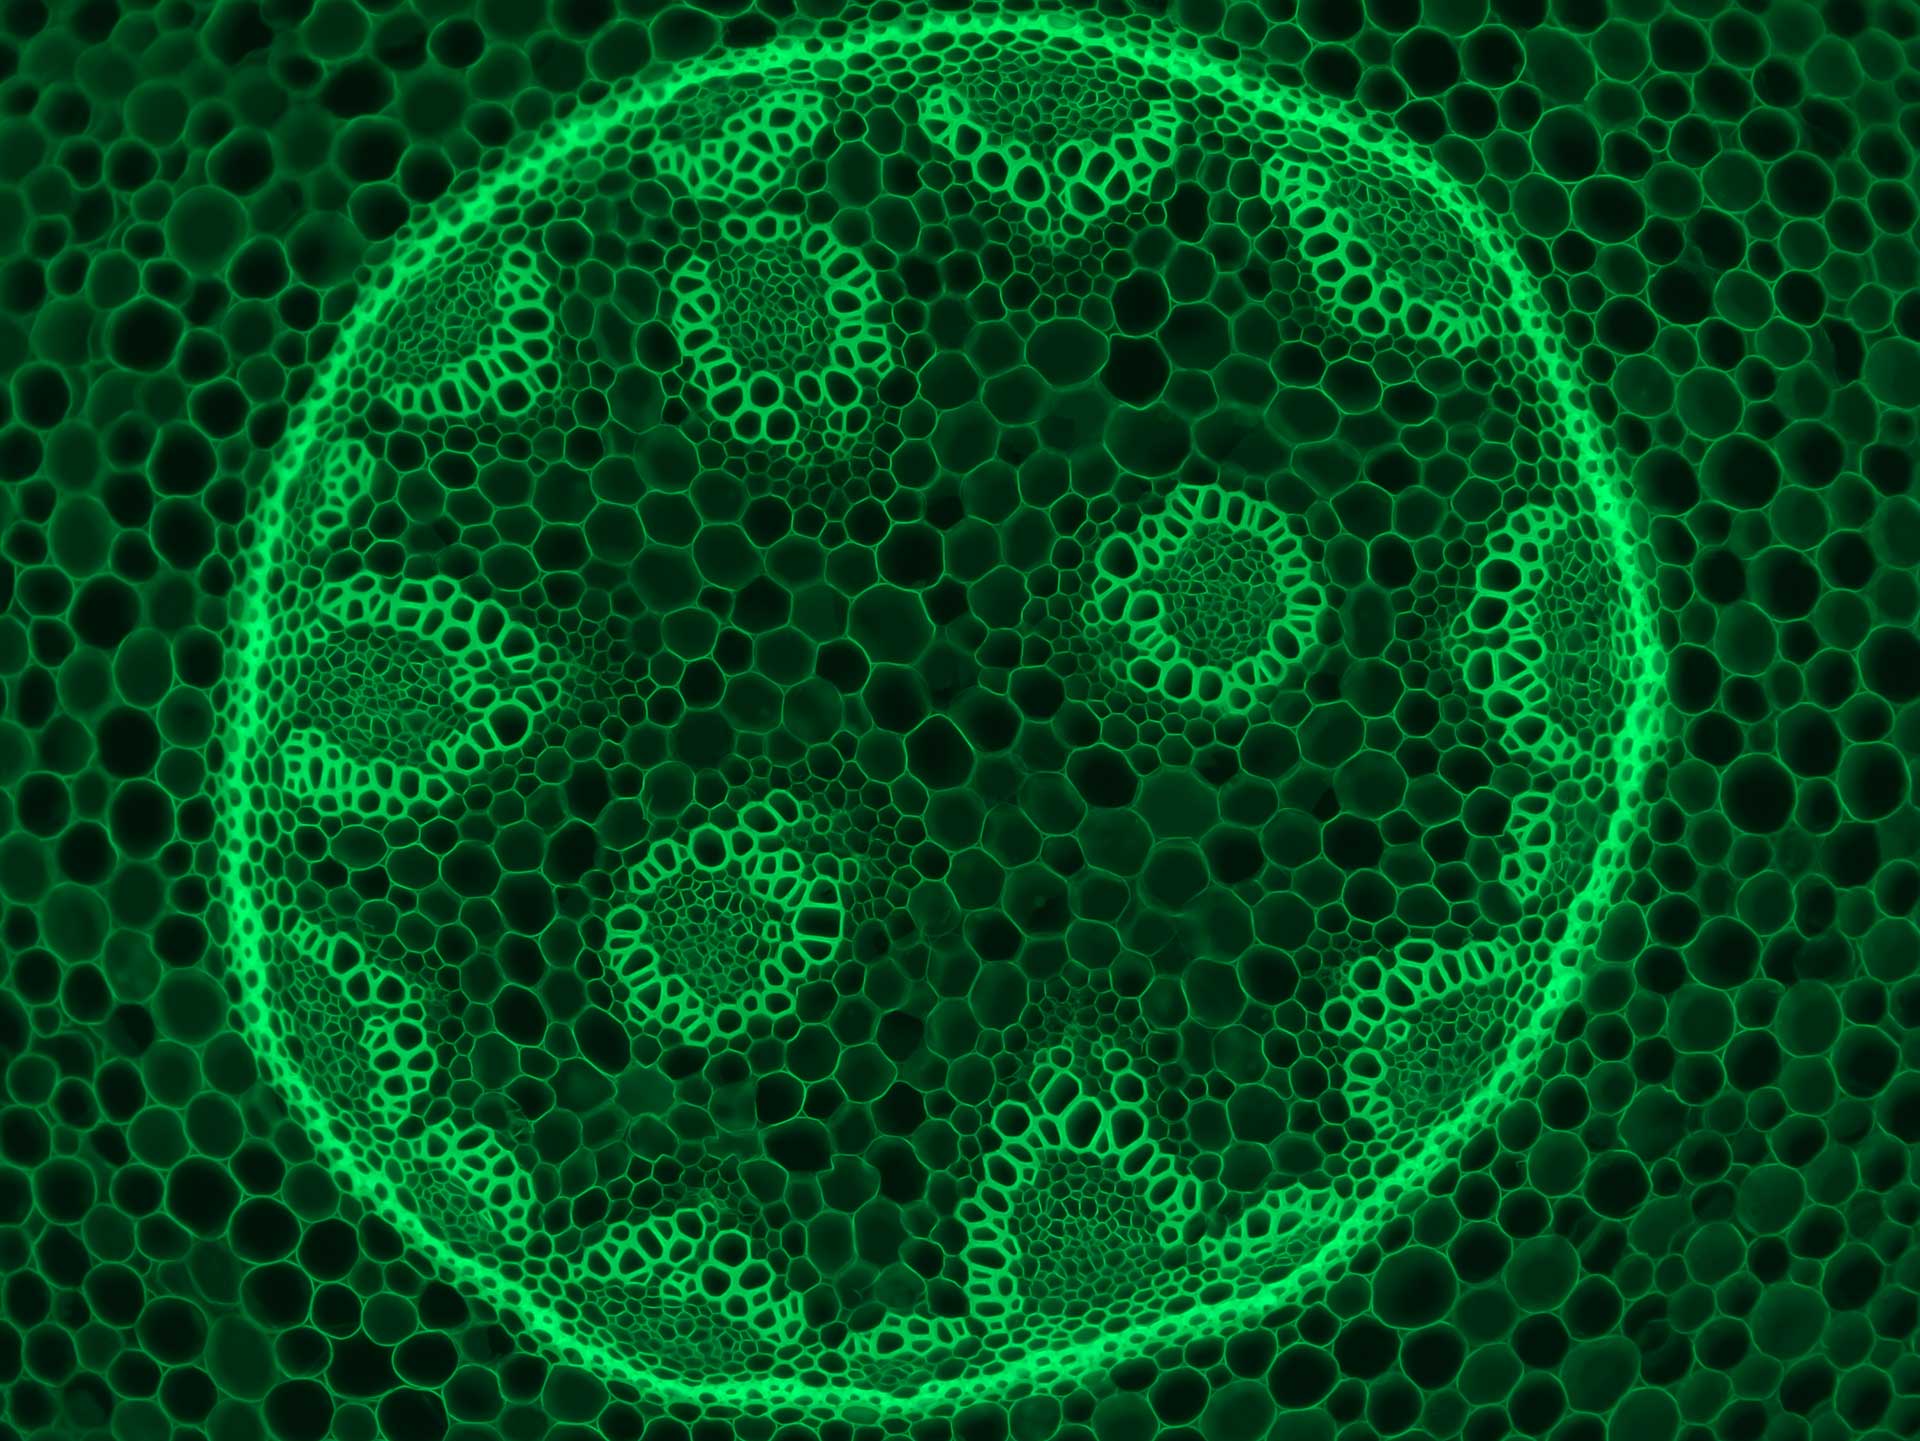 Fluorescence image, green